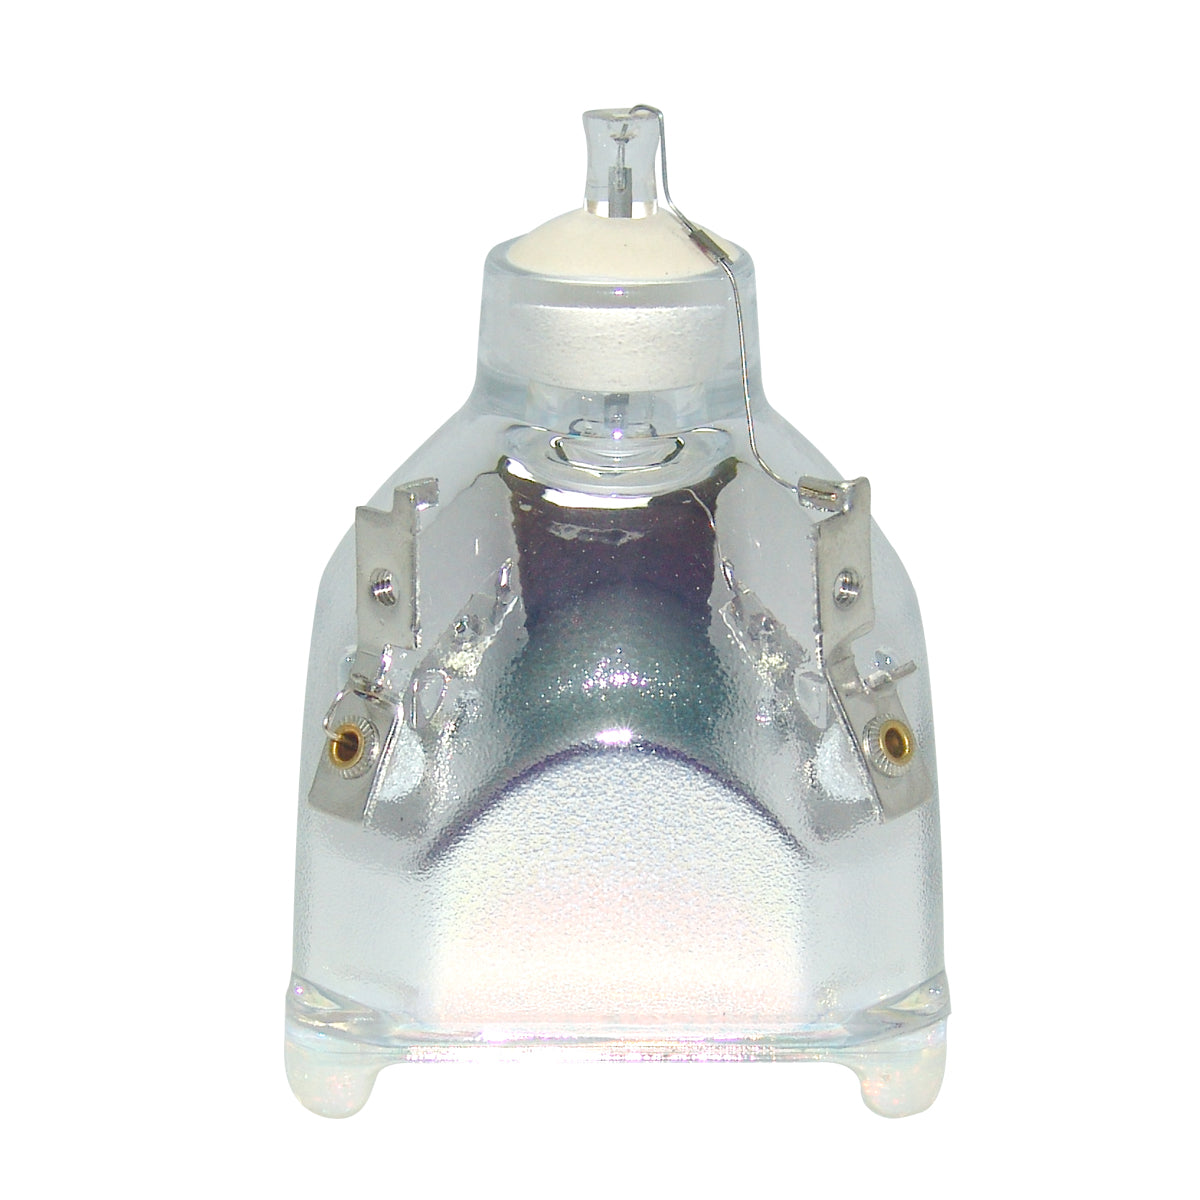 Dukane 456-229-1 Osram Projector Bare Lamp